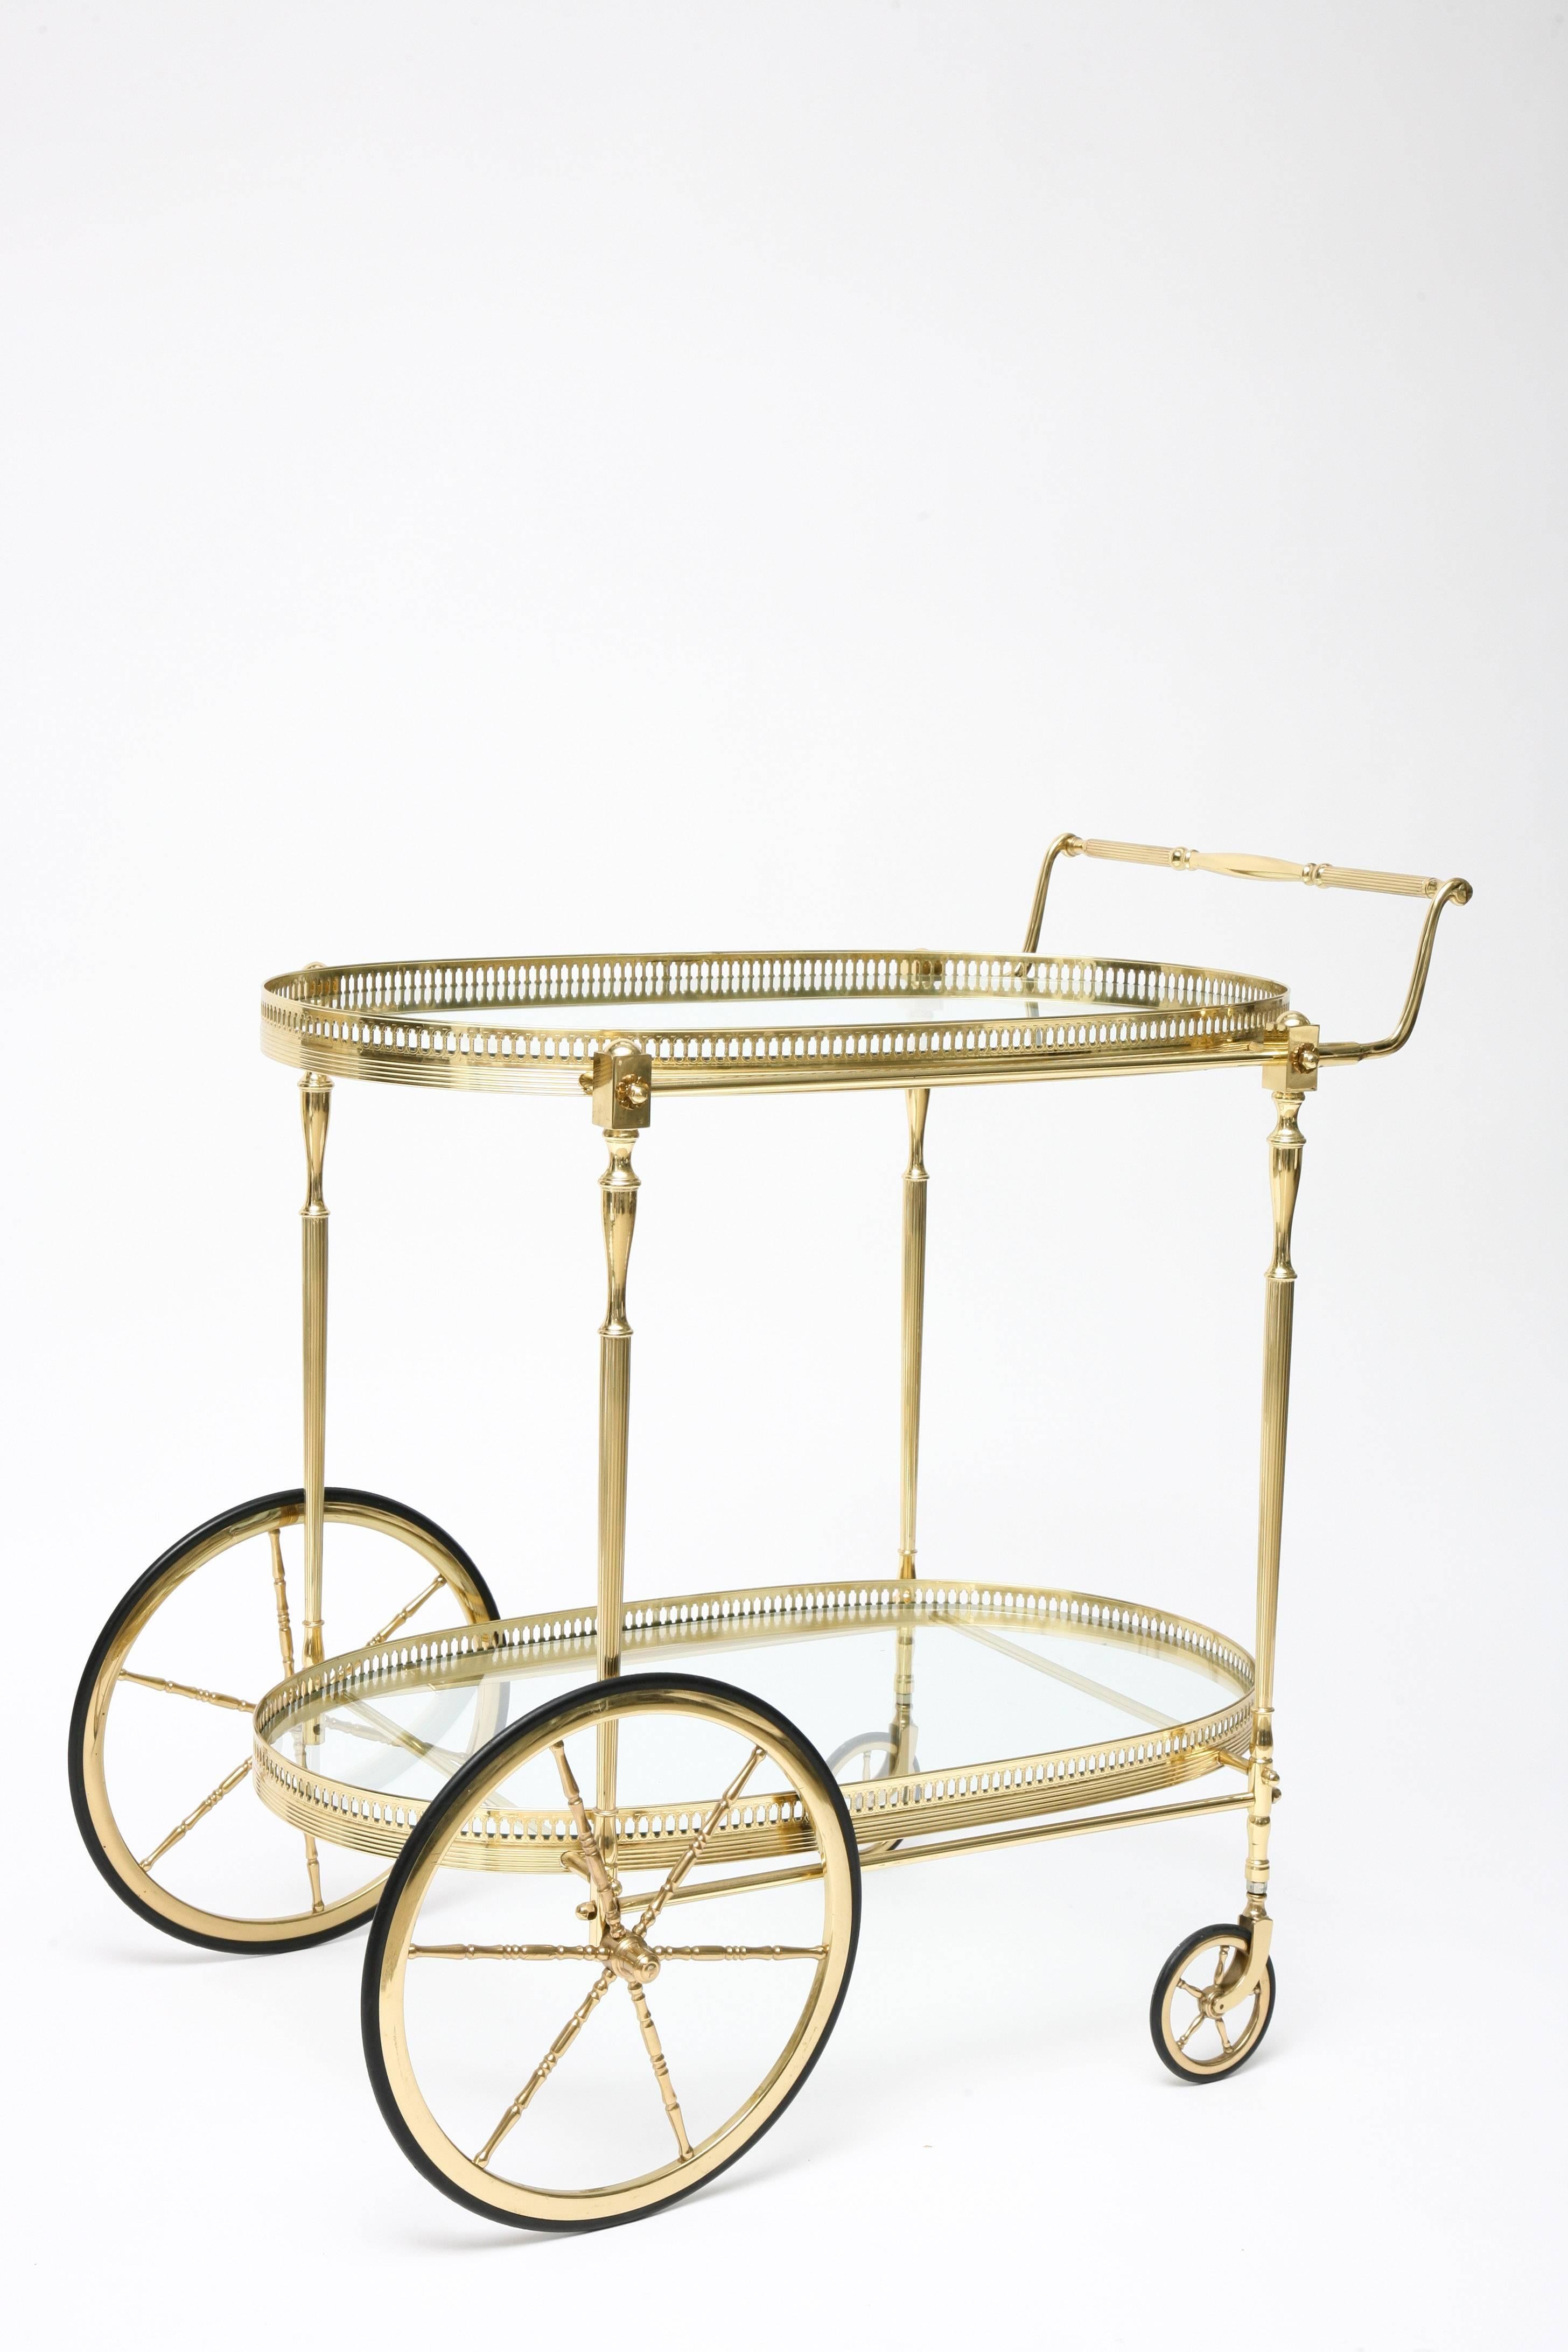 Hollywood Regency Hollywood-Regency, Maison Jansen Style, Polished Brass and Glass Bar Cart